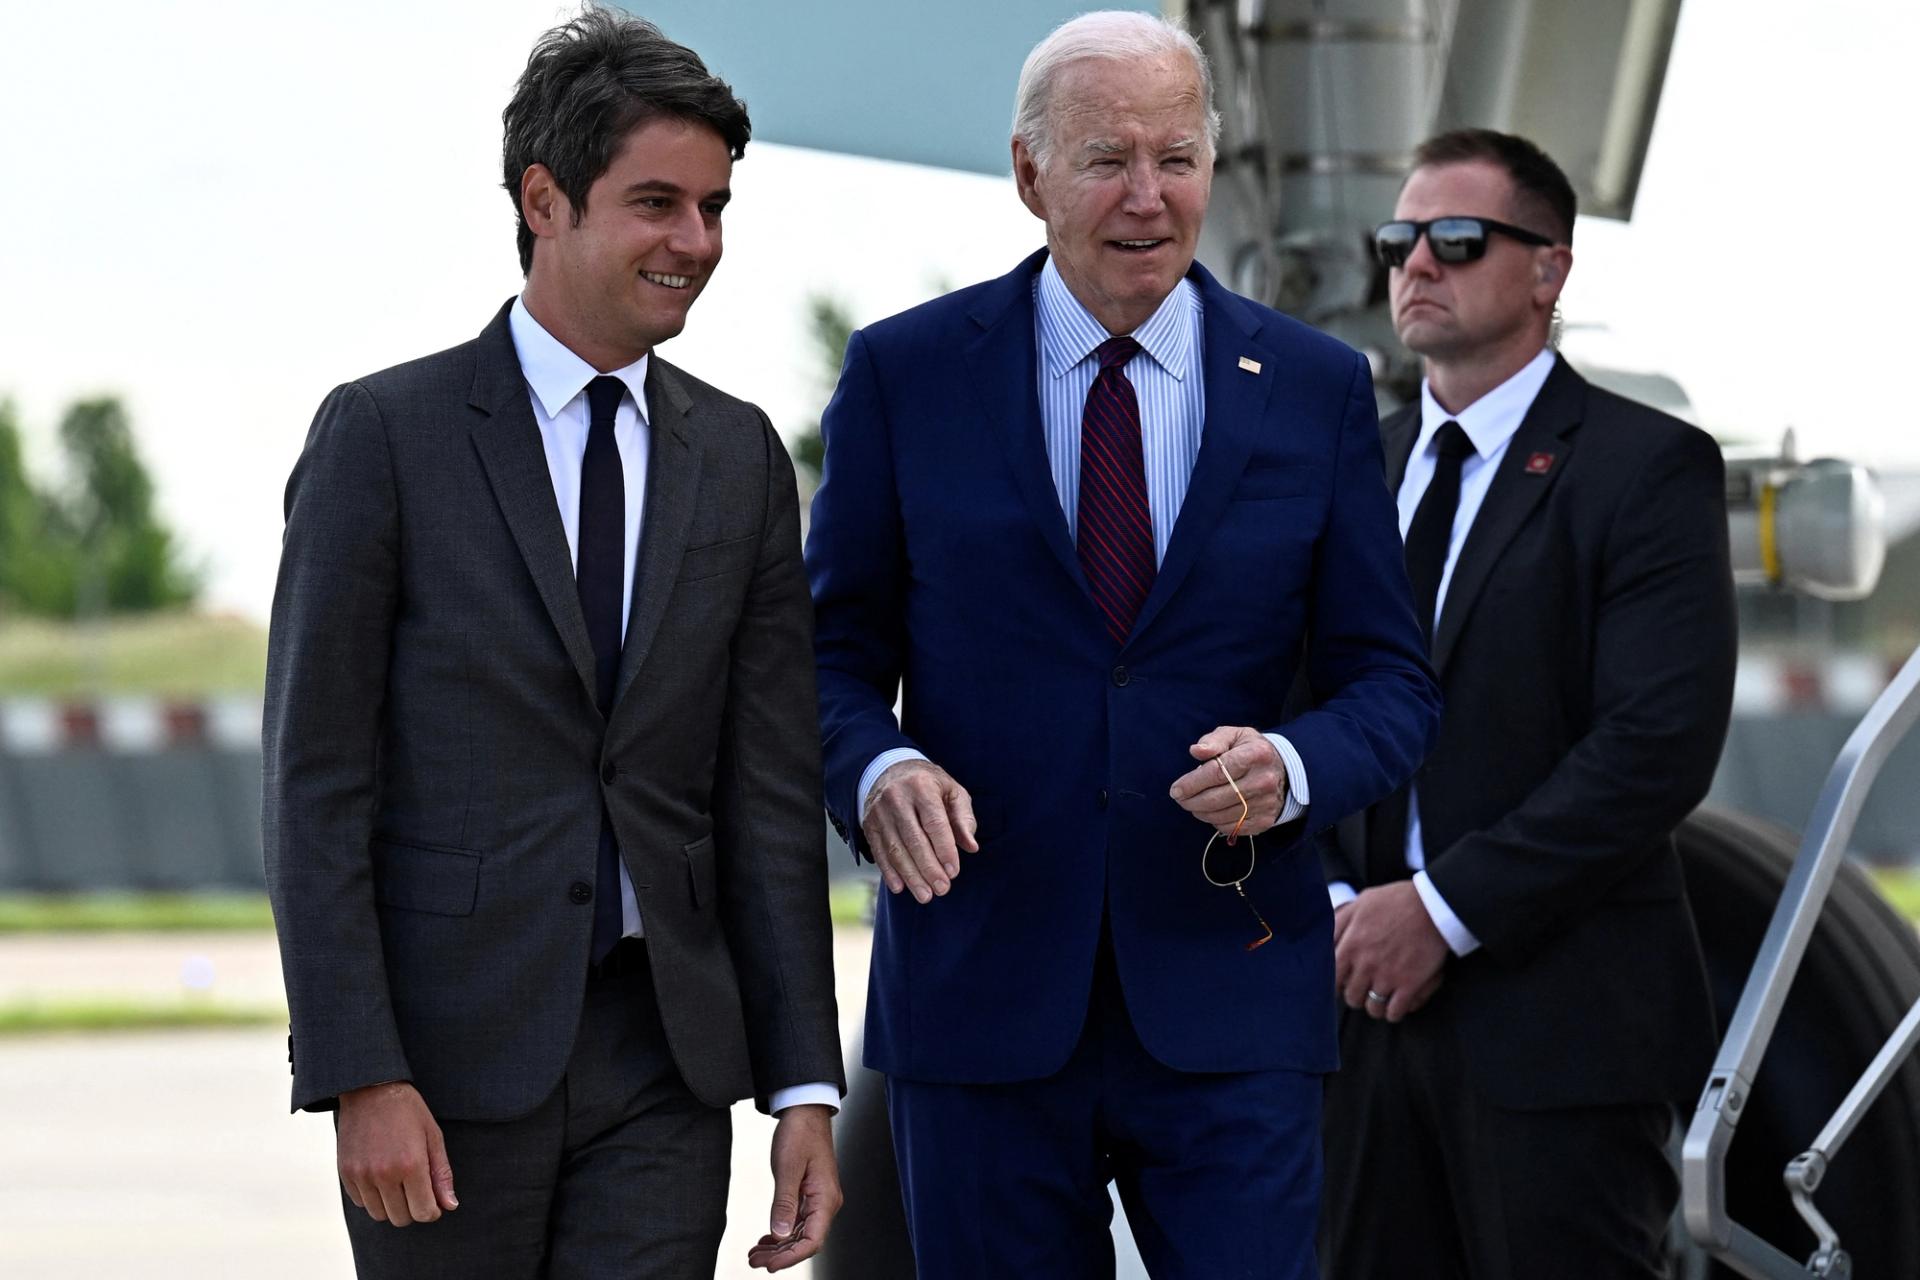 Biden arrives in Europe on trip to showcase Western alliances (semafor.com)